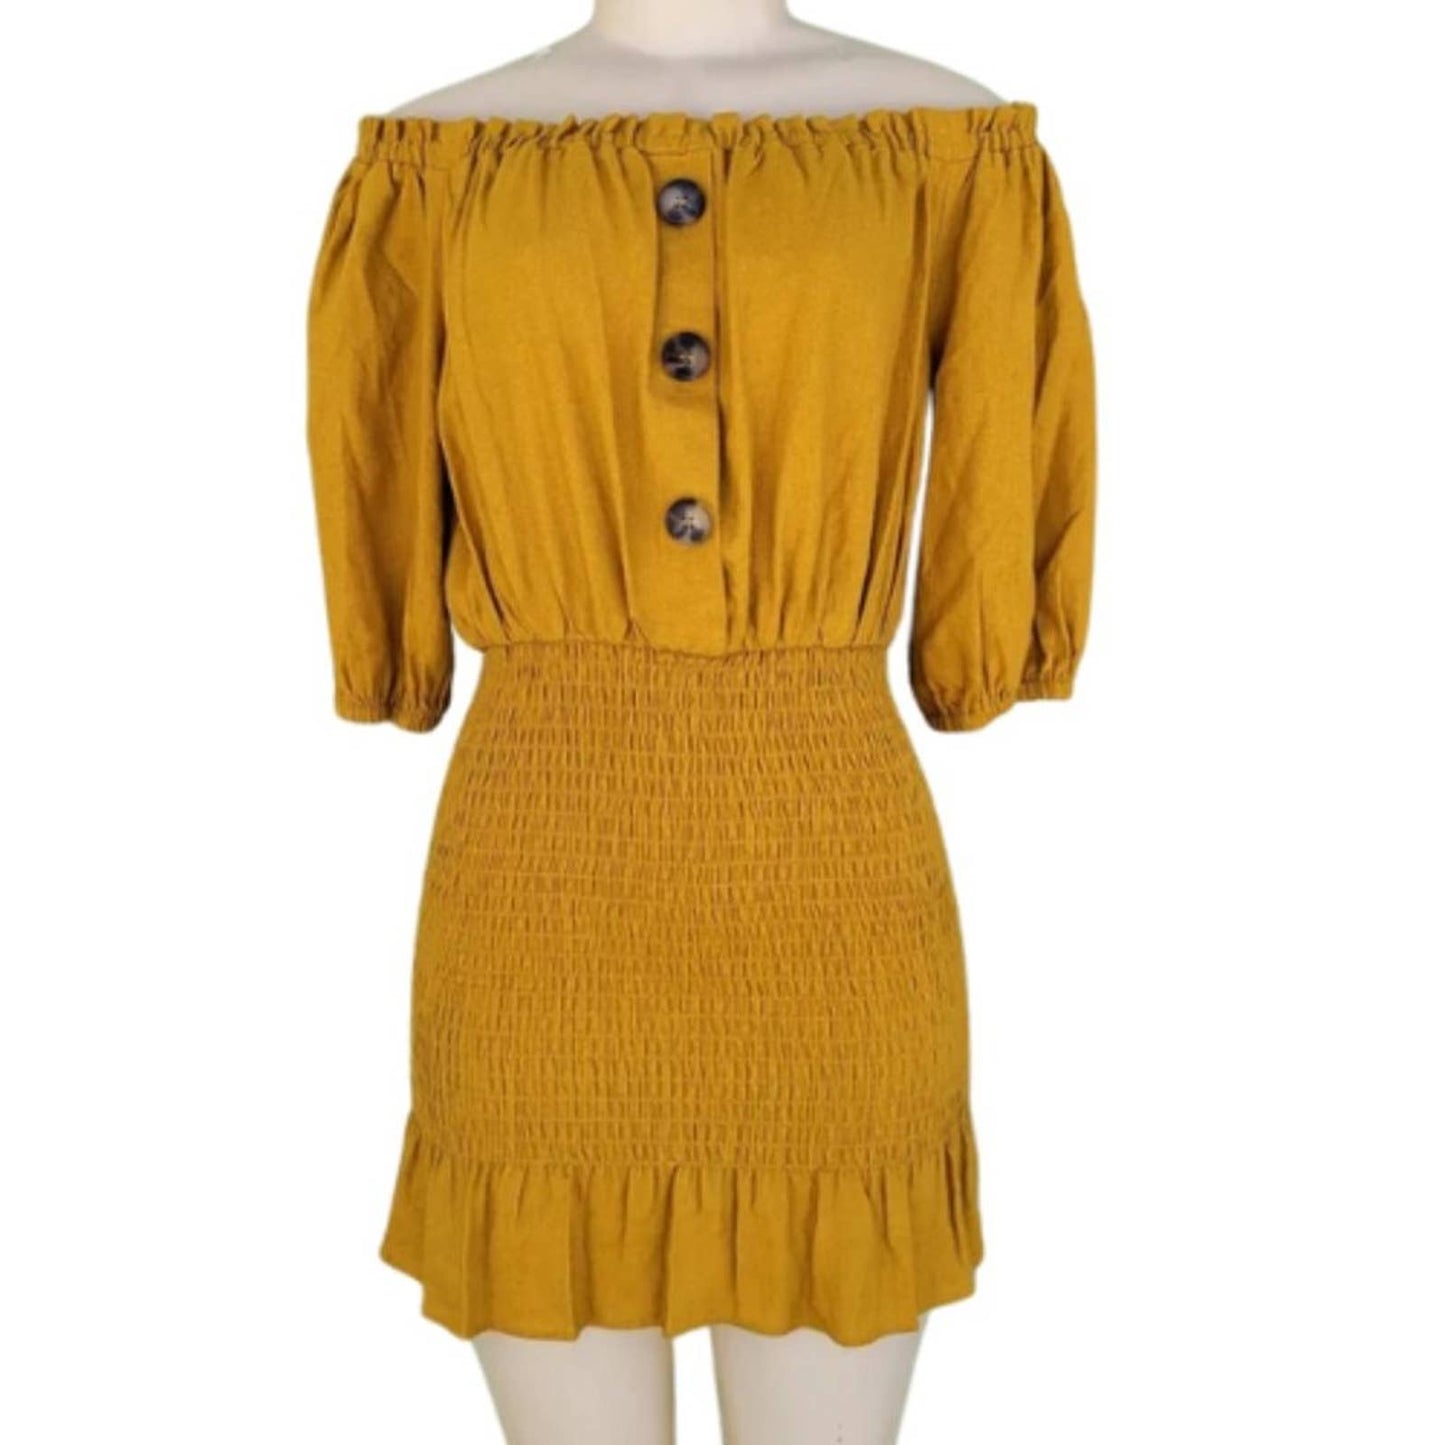 Zara Rustic Smocked Boho Mini Dress Size Small